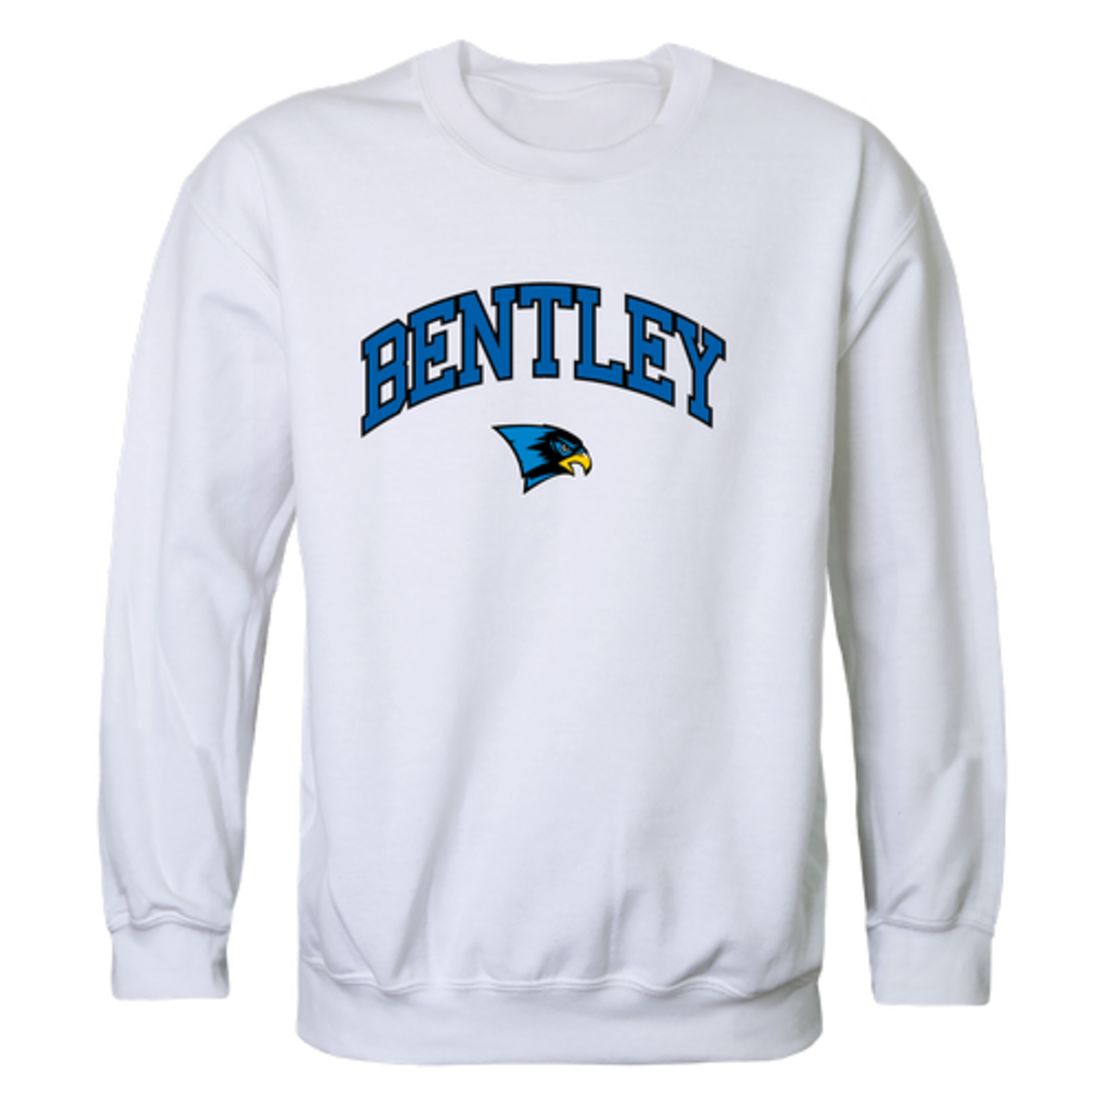 Bentley University Falcons Campus Crewneck Sweatshirt